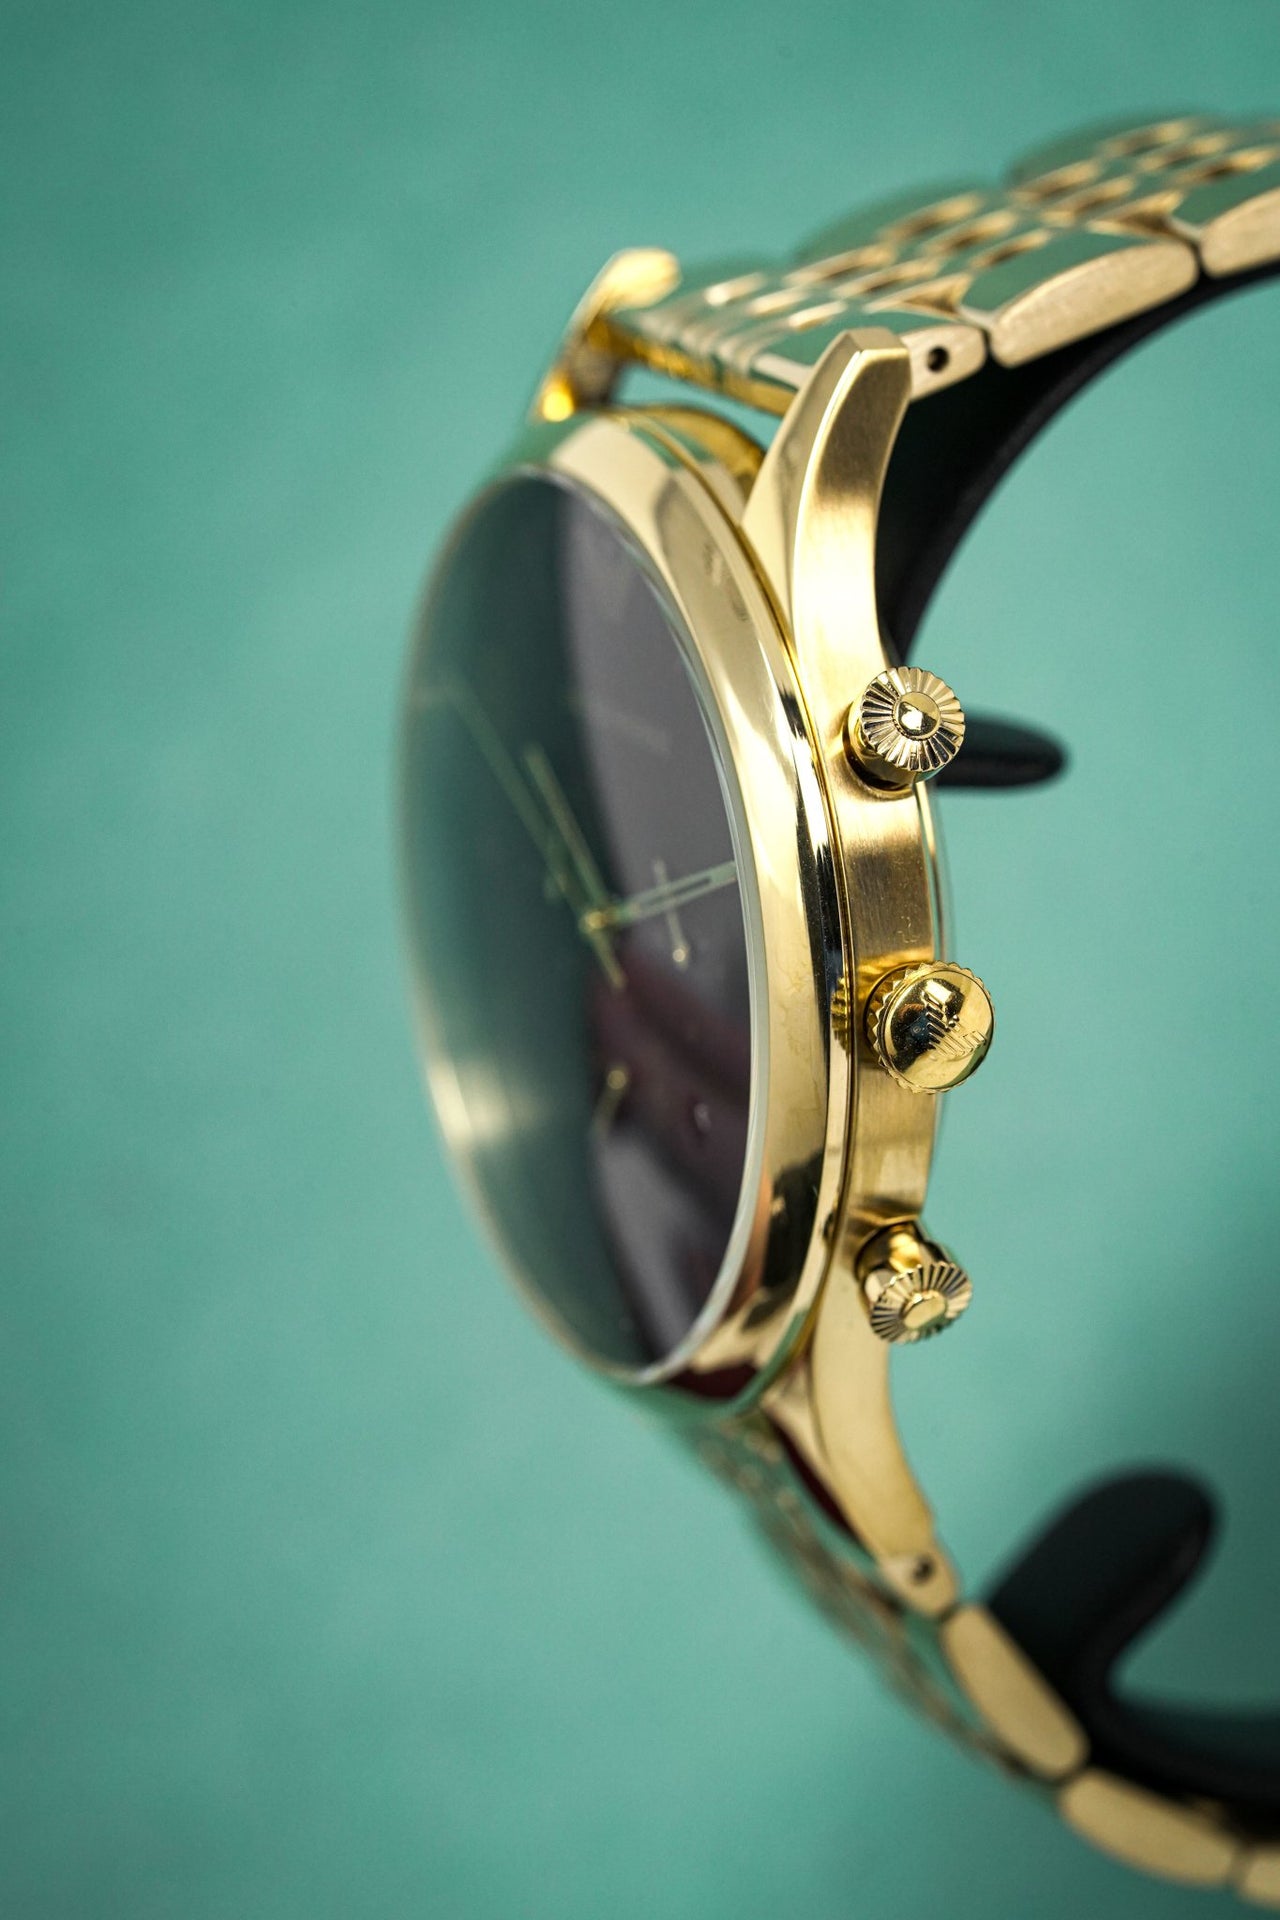 Emporio Armani Men's Chronograph Watch Gold PVD AR1893 - Watches & Crystals